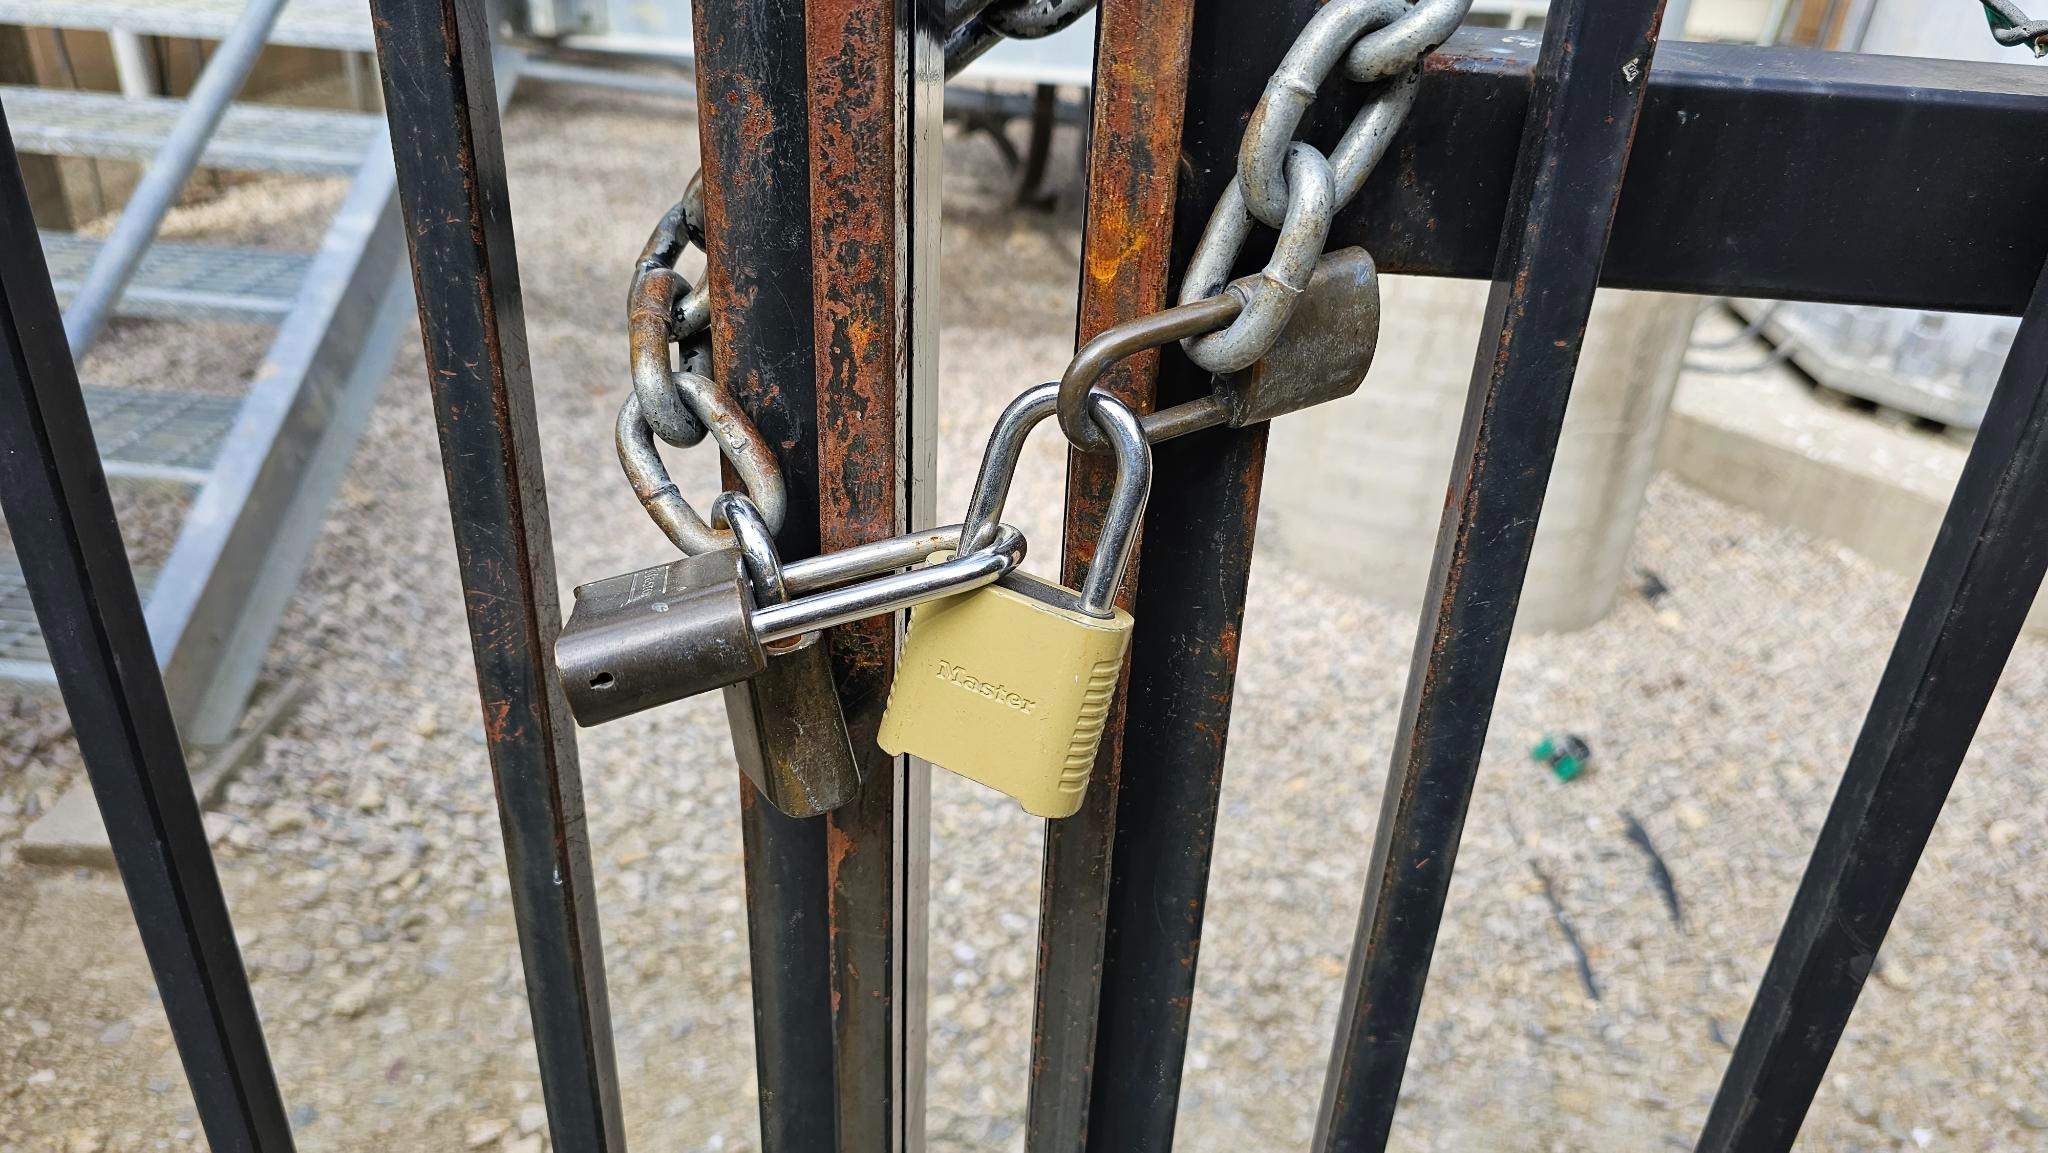 More Locks = More Security?